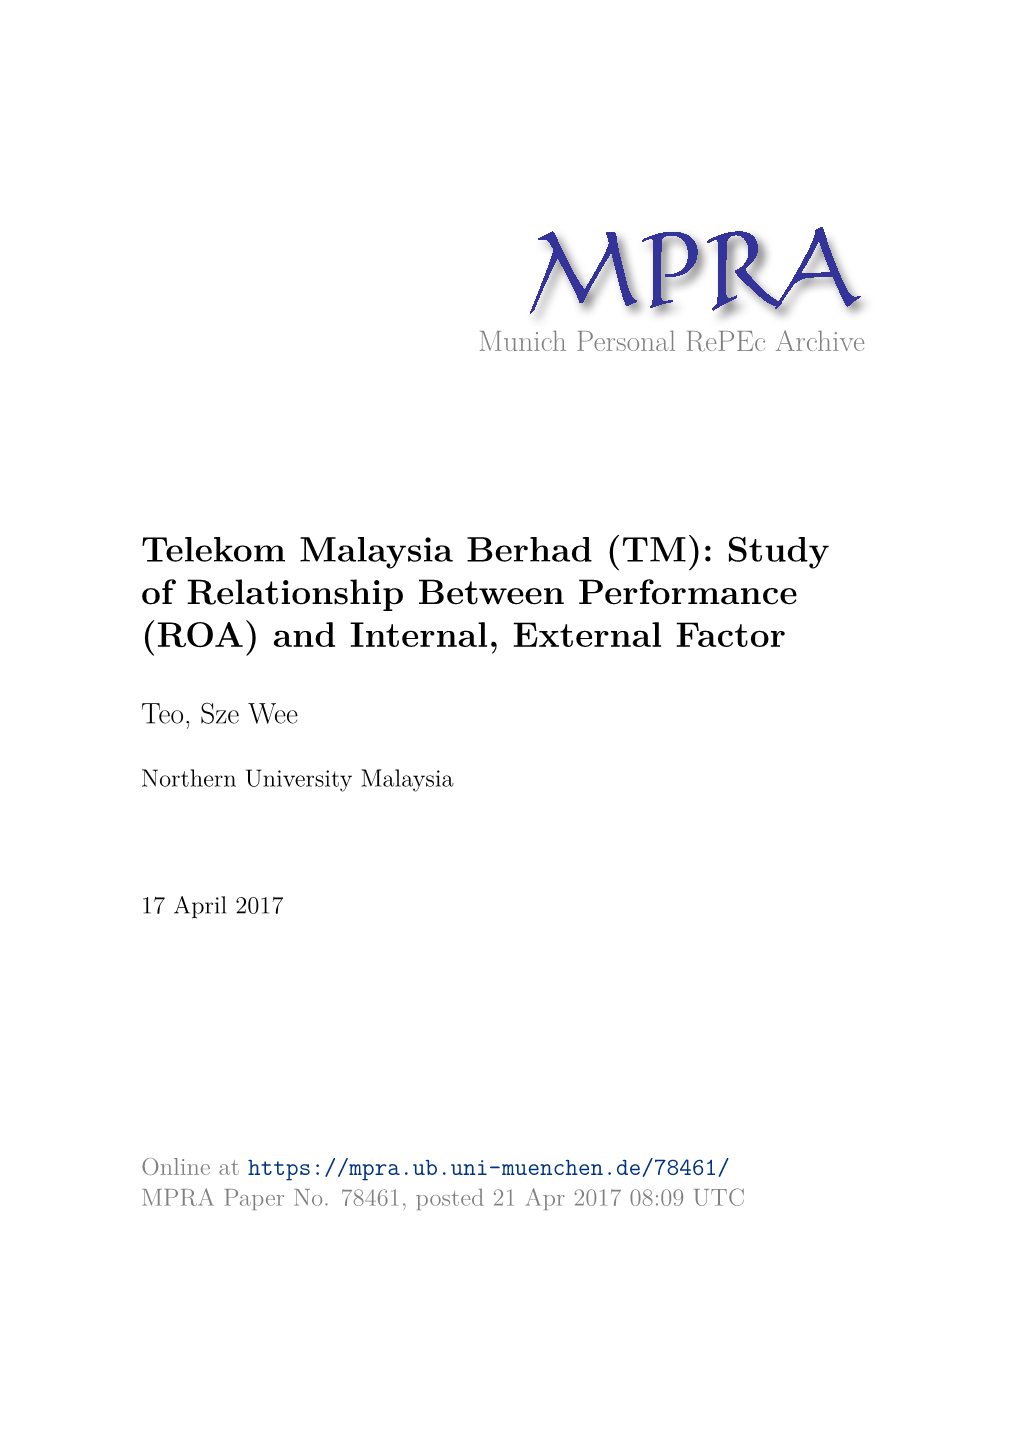 Telekom Malaysia Berhad (TM): Study of Relationship Between Performance (ROA) and Internal, External Factor